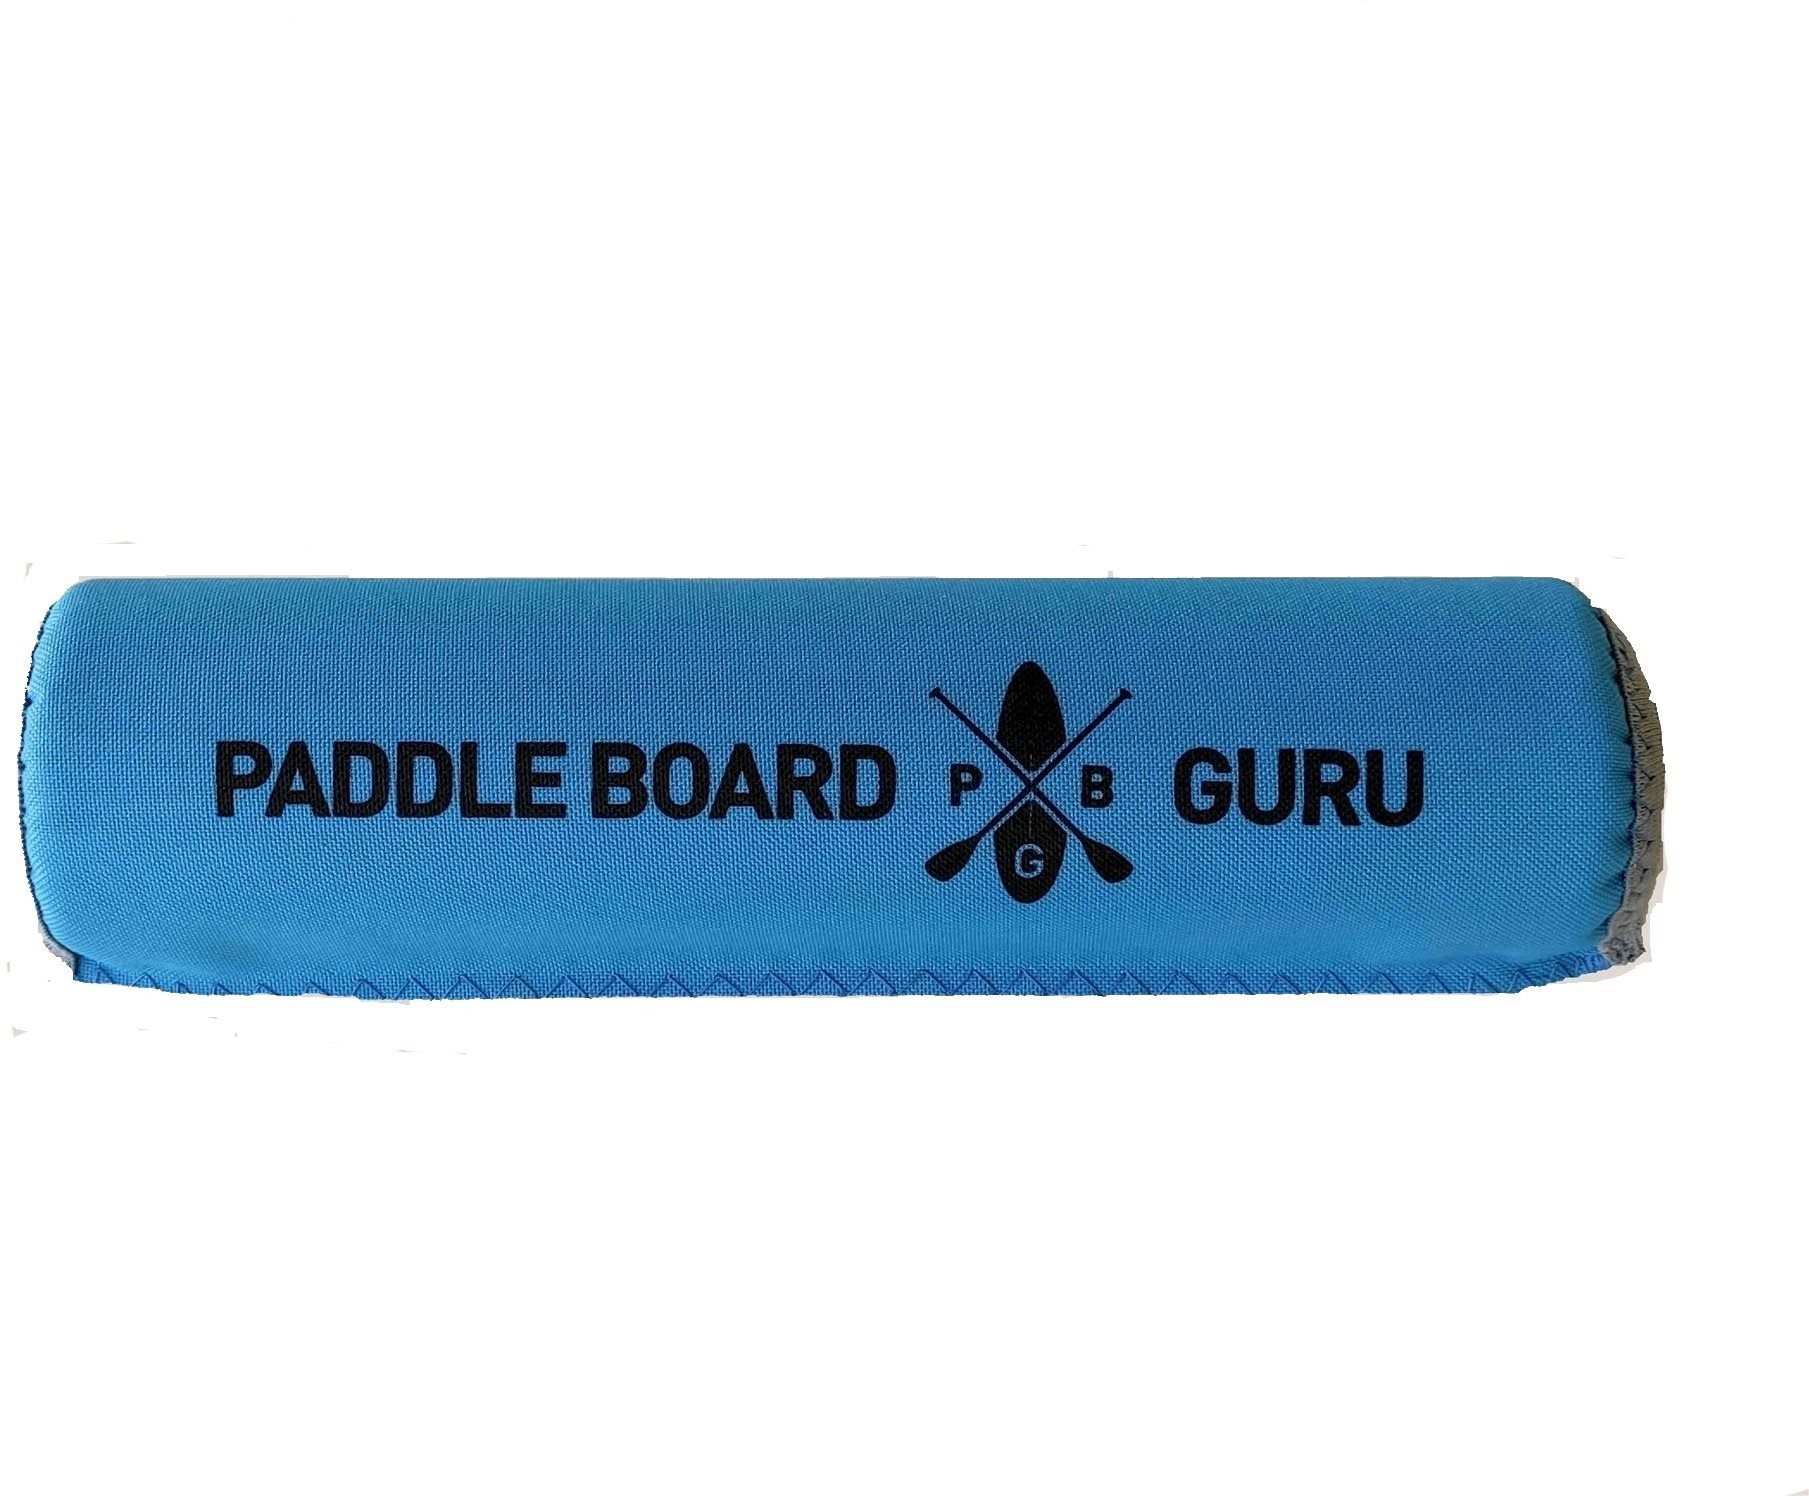 Paddle floater Paddleboardguru neon blue